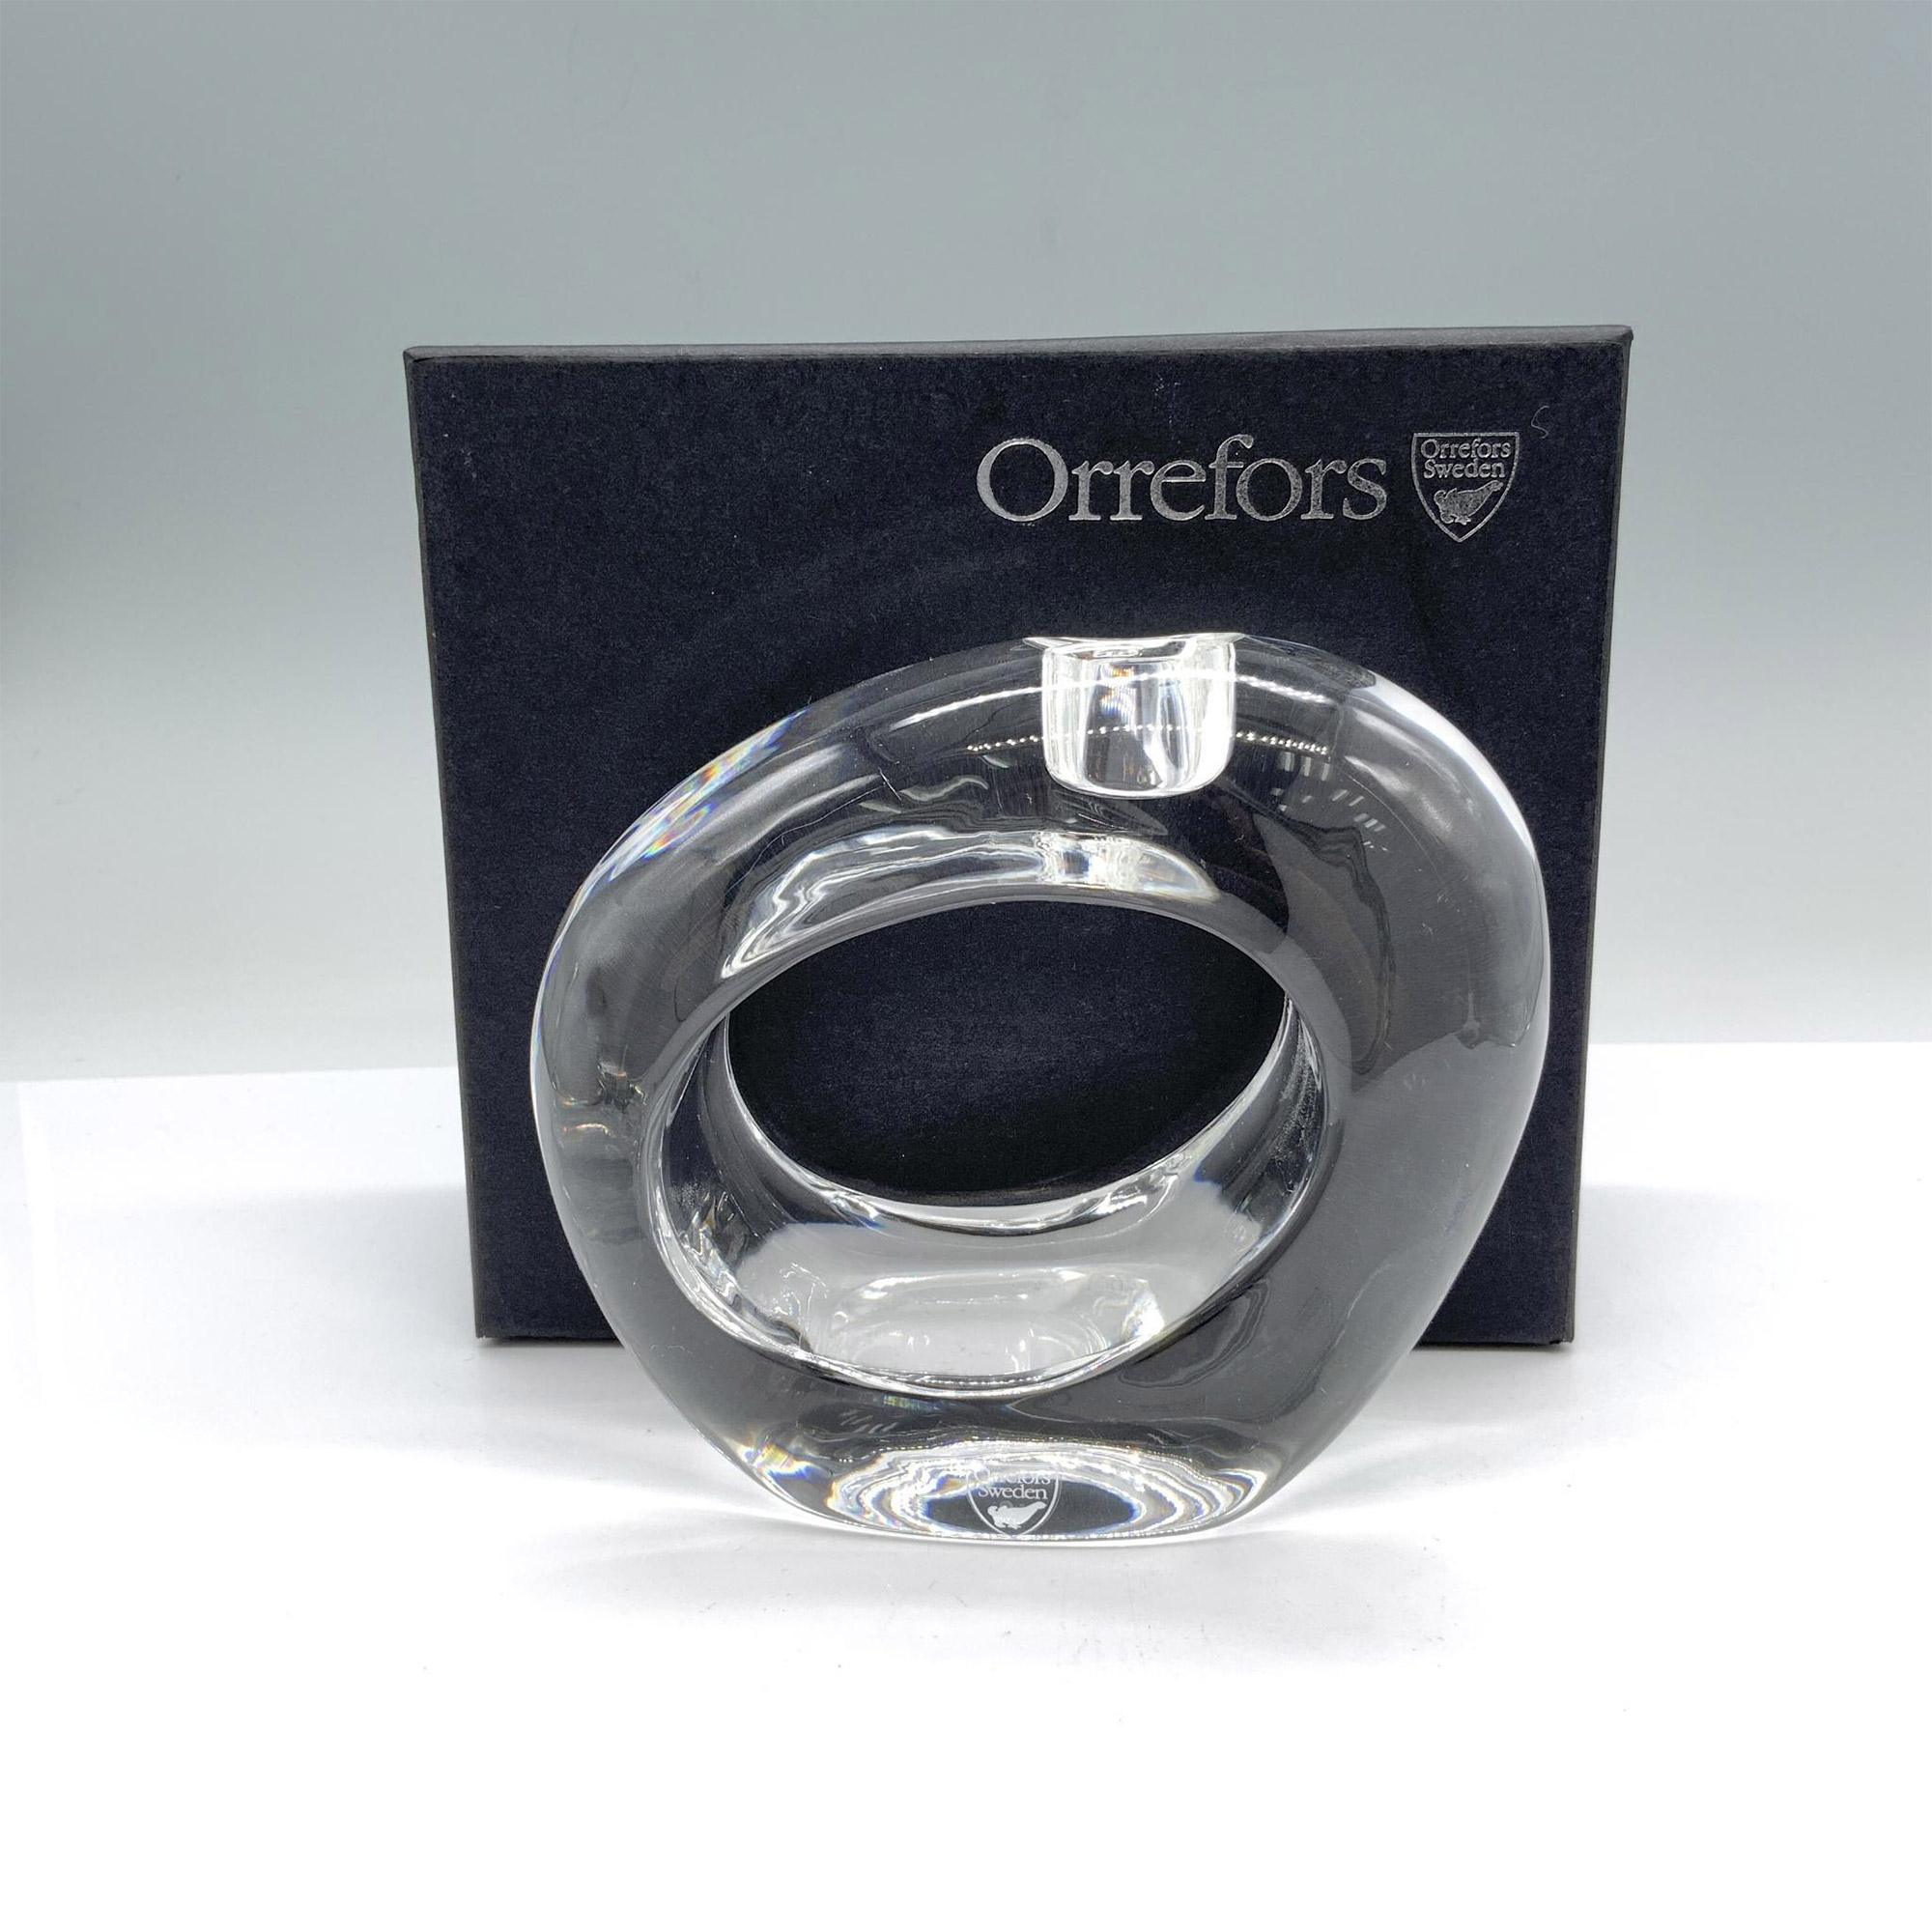 Orrefors Crystal Avlang Oval Candle Holder - Image 5 of 5